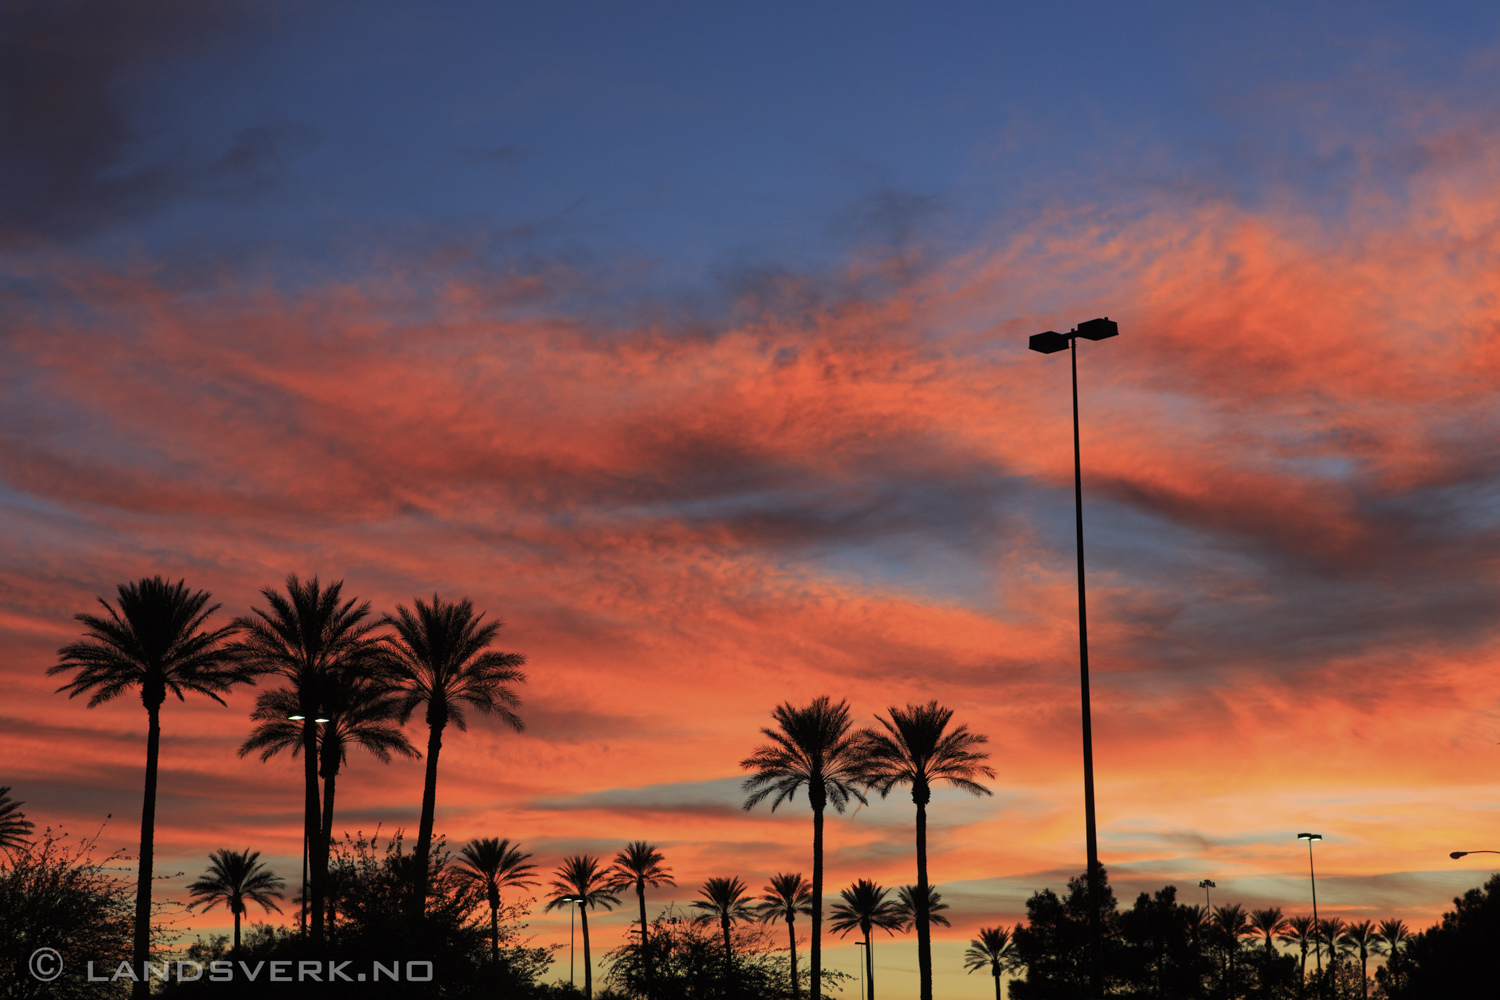 Las Vegas, Nevada. 

(Canon EOS 5D Mark III / Canon EF 24-70mm f/2.8 L USM)